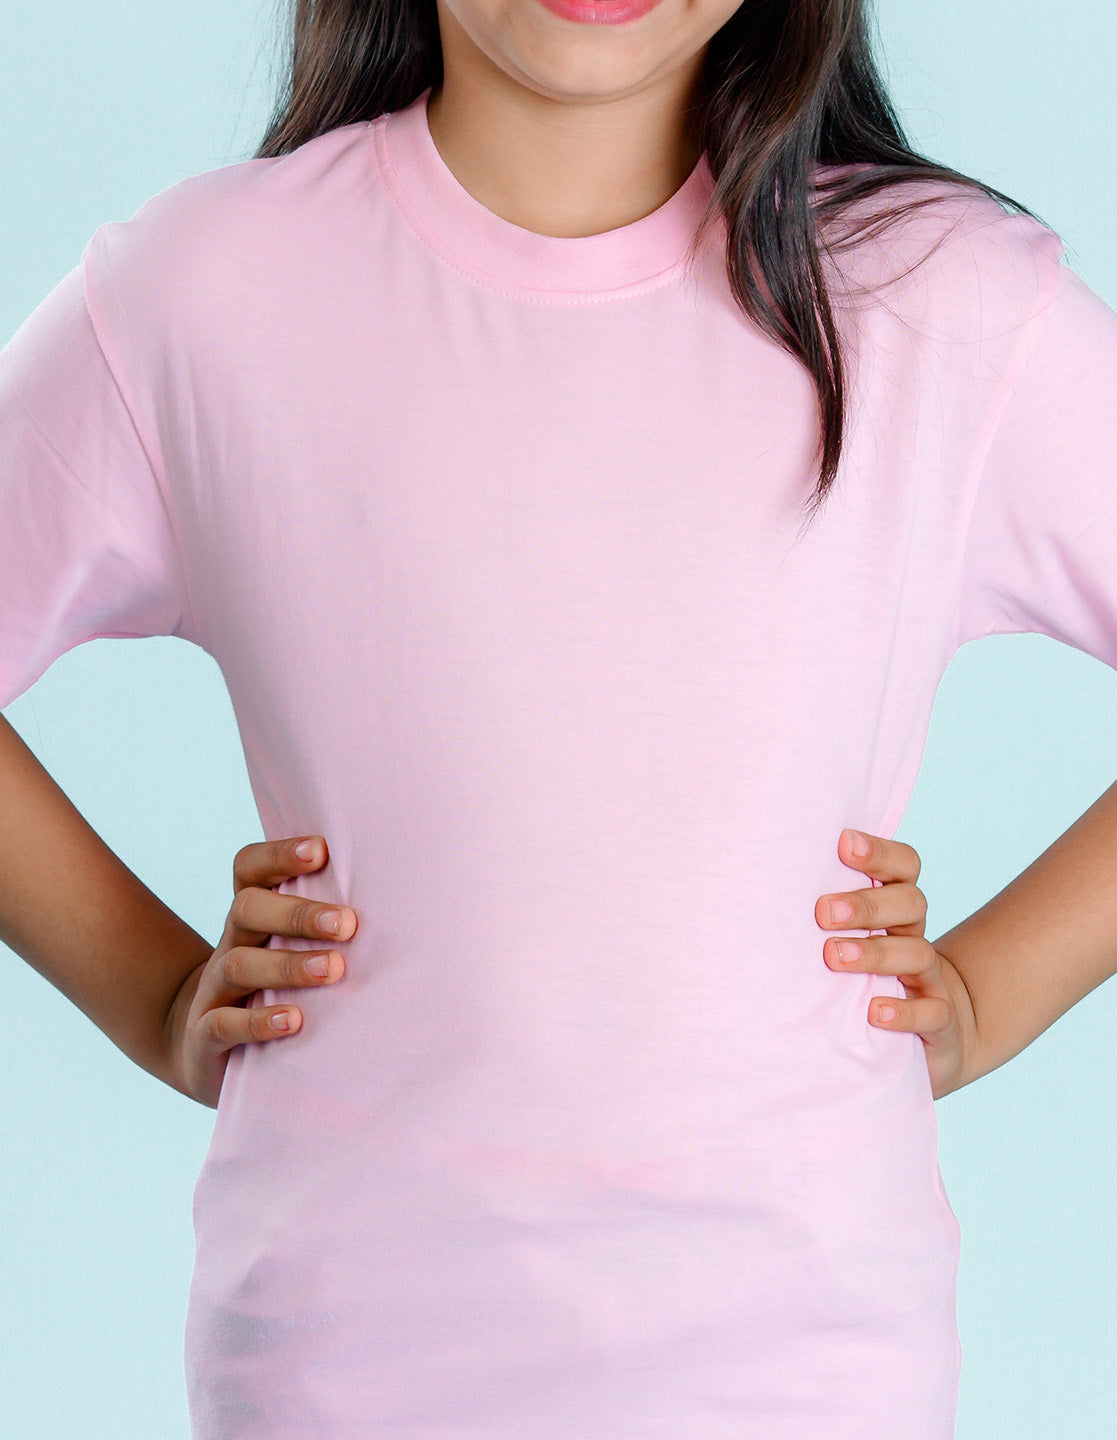 Nusyl Girls Solid Light Pink Oversized T-shirt